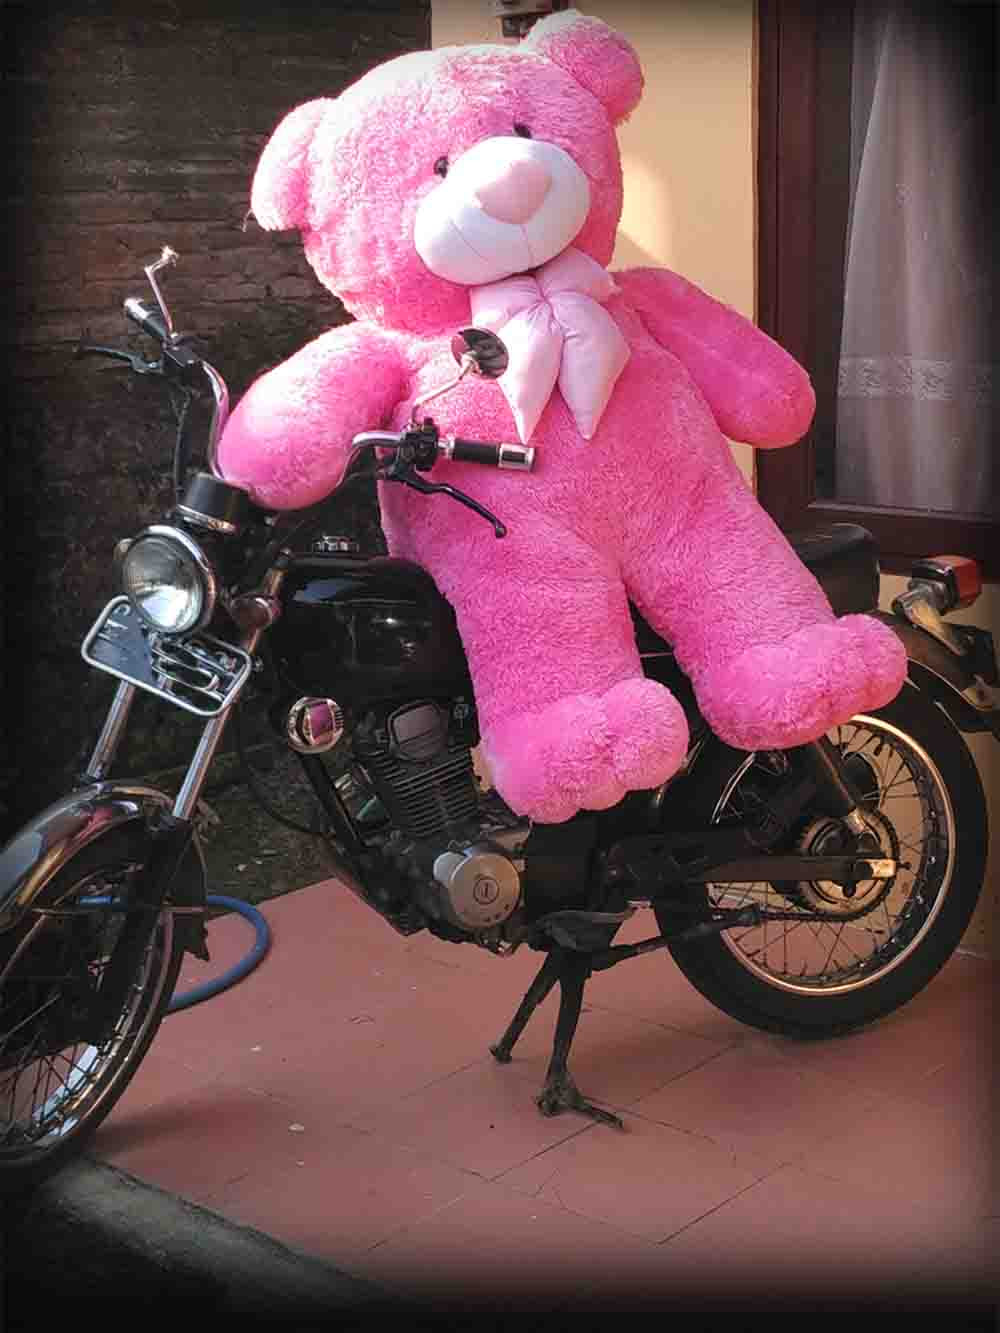 Jual Boneka Teddy Bear Choosy Giant Super Jumbo Pink Muda